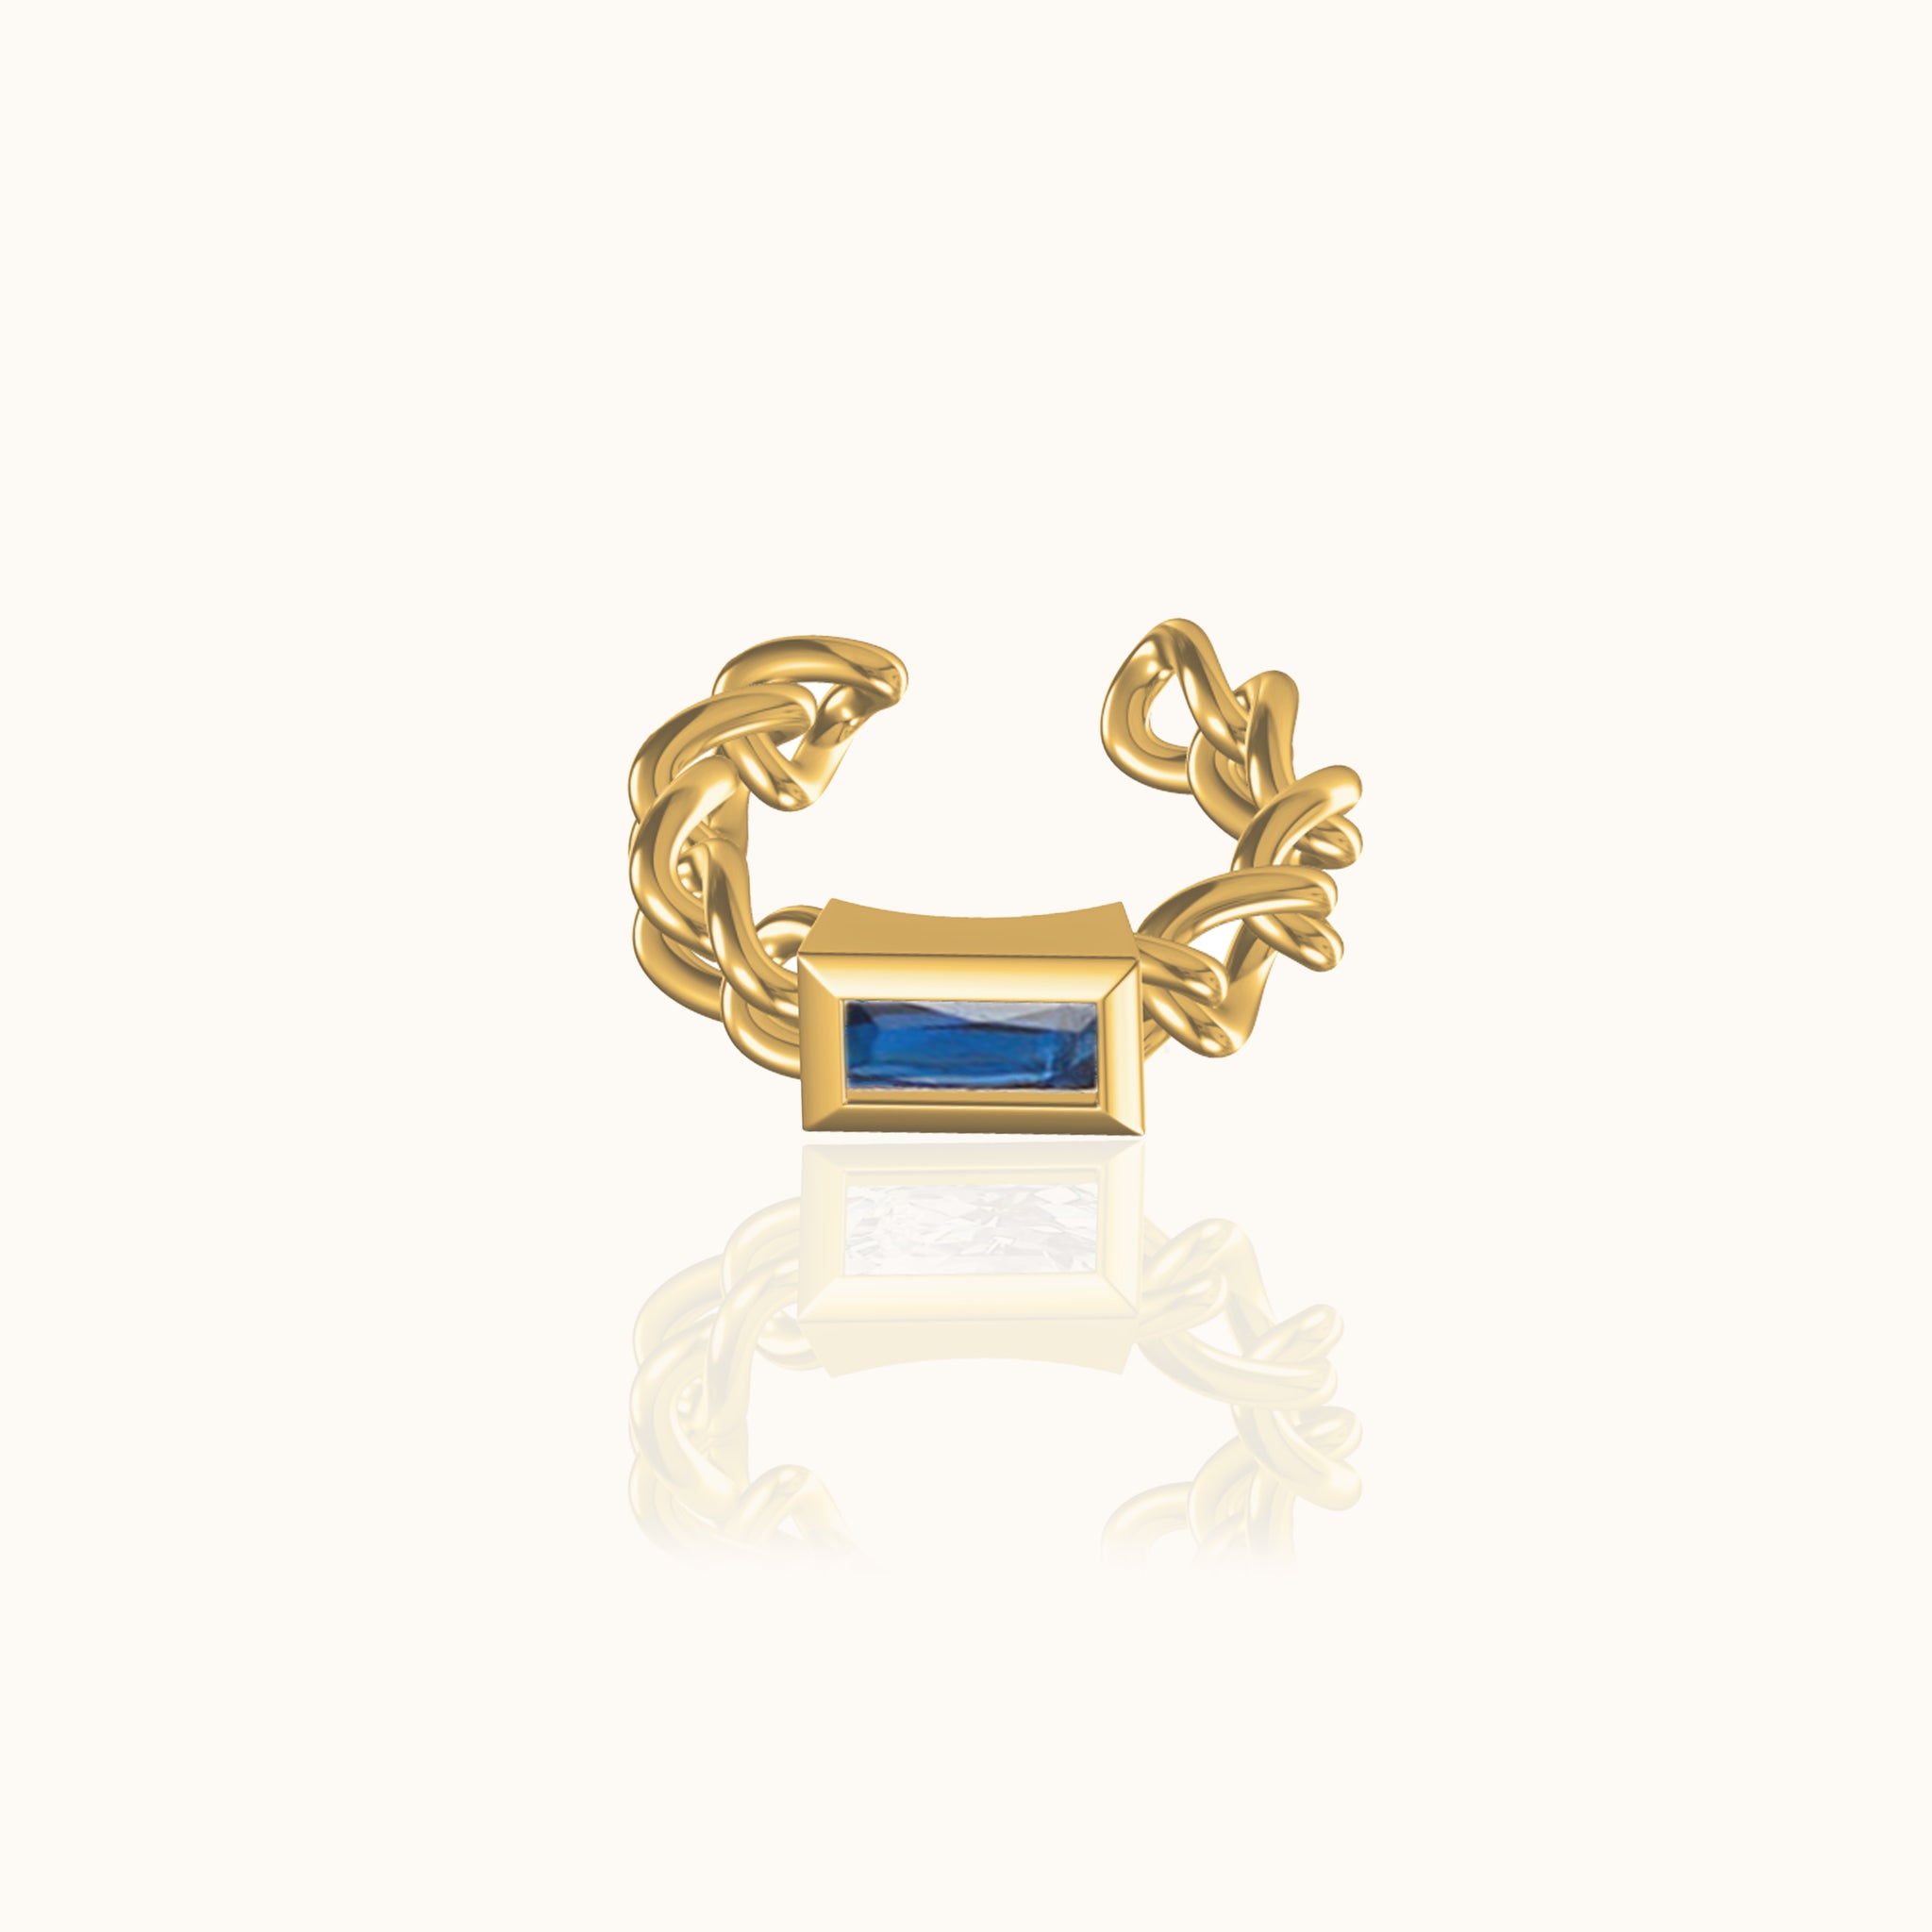 Cuban Chain Cartilage Fake Piercing Gold Cuff Single Blue CZ Ear Cuff by Doviana